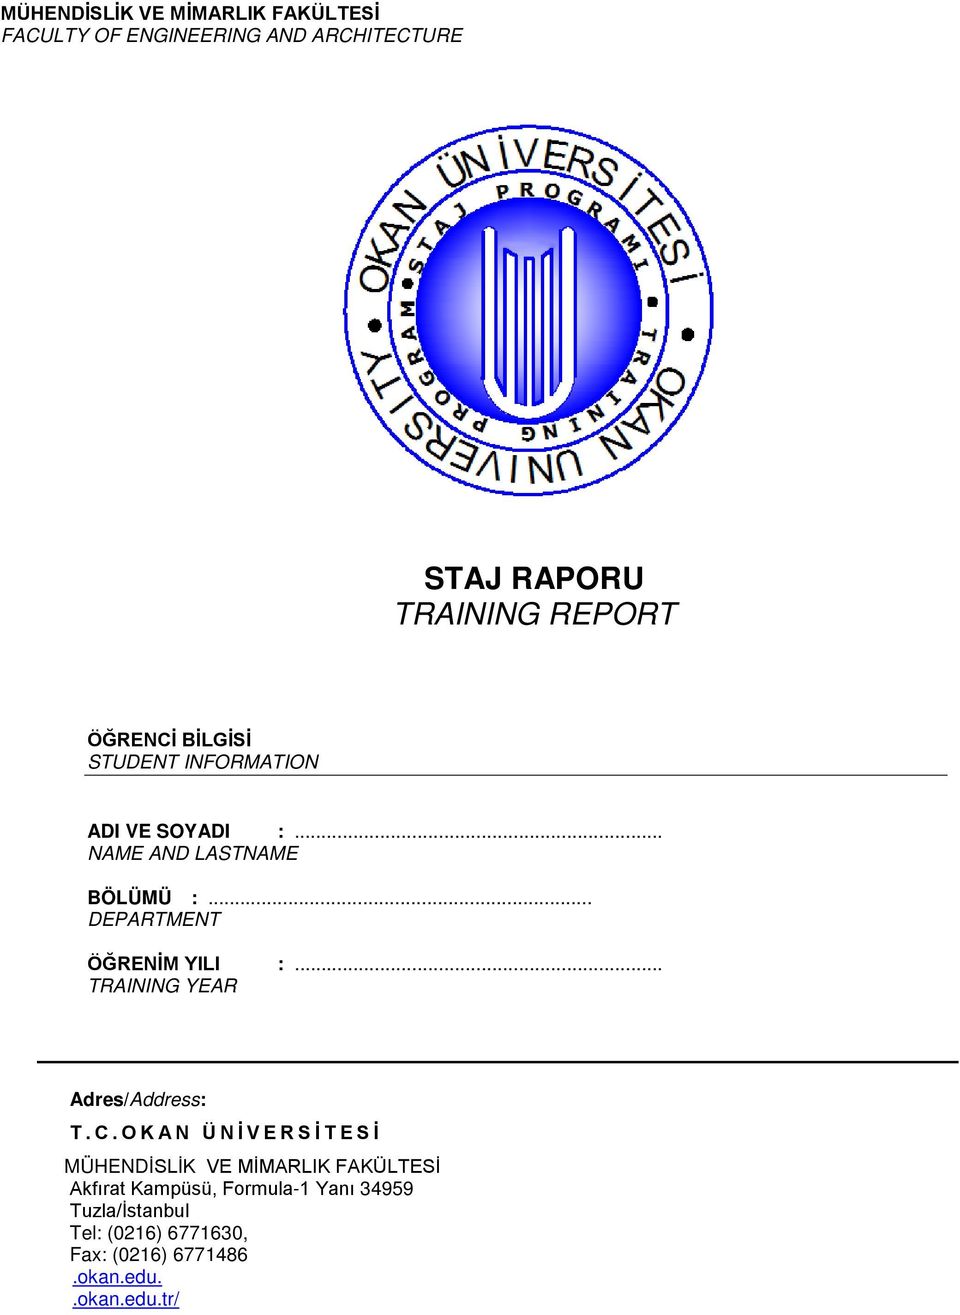 STAJ RAPORU TRAINING REPORT - PDF Ücretsiz indirin